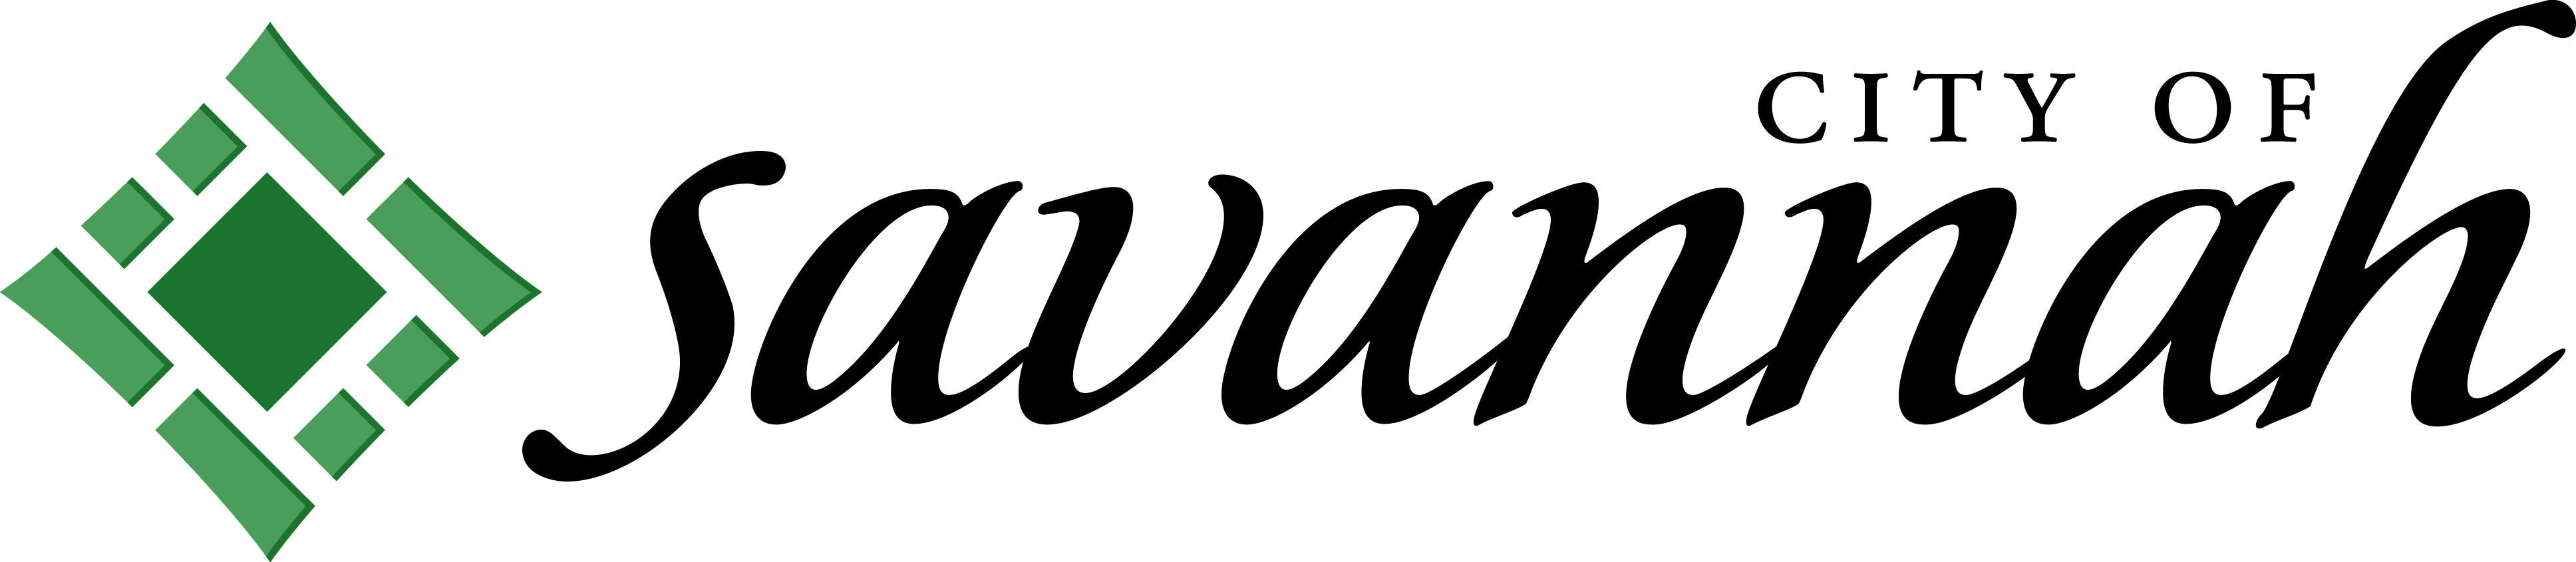 Savannah Logo - City of Savannah Location Permit Request Confirmation - Savannah ...